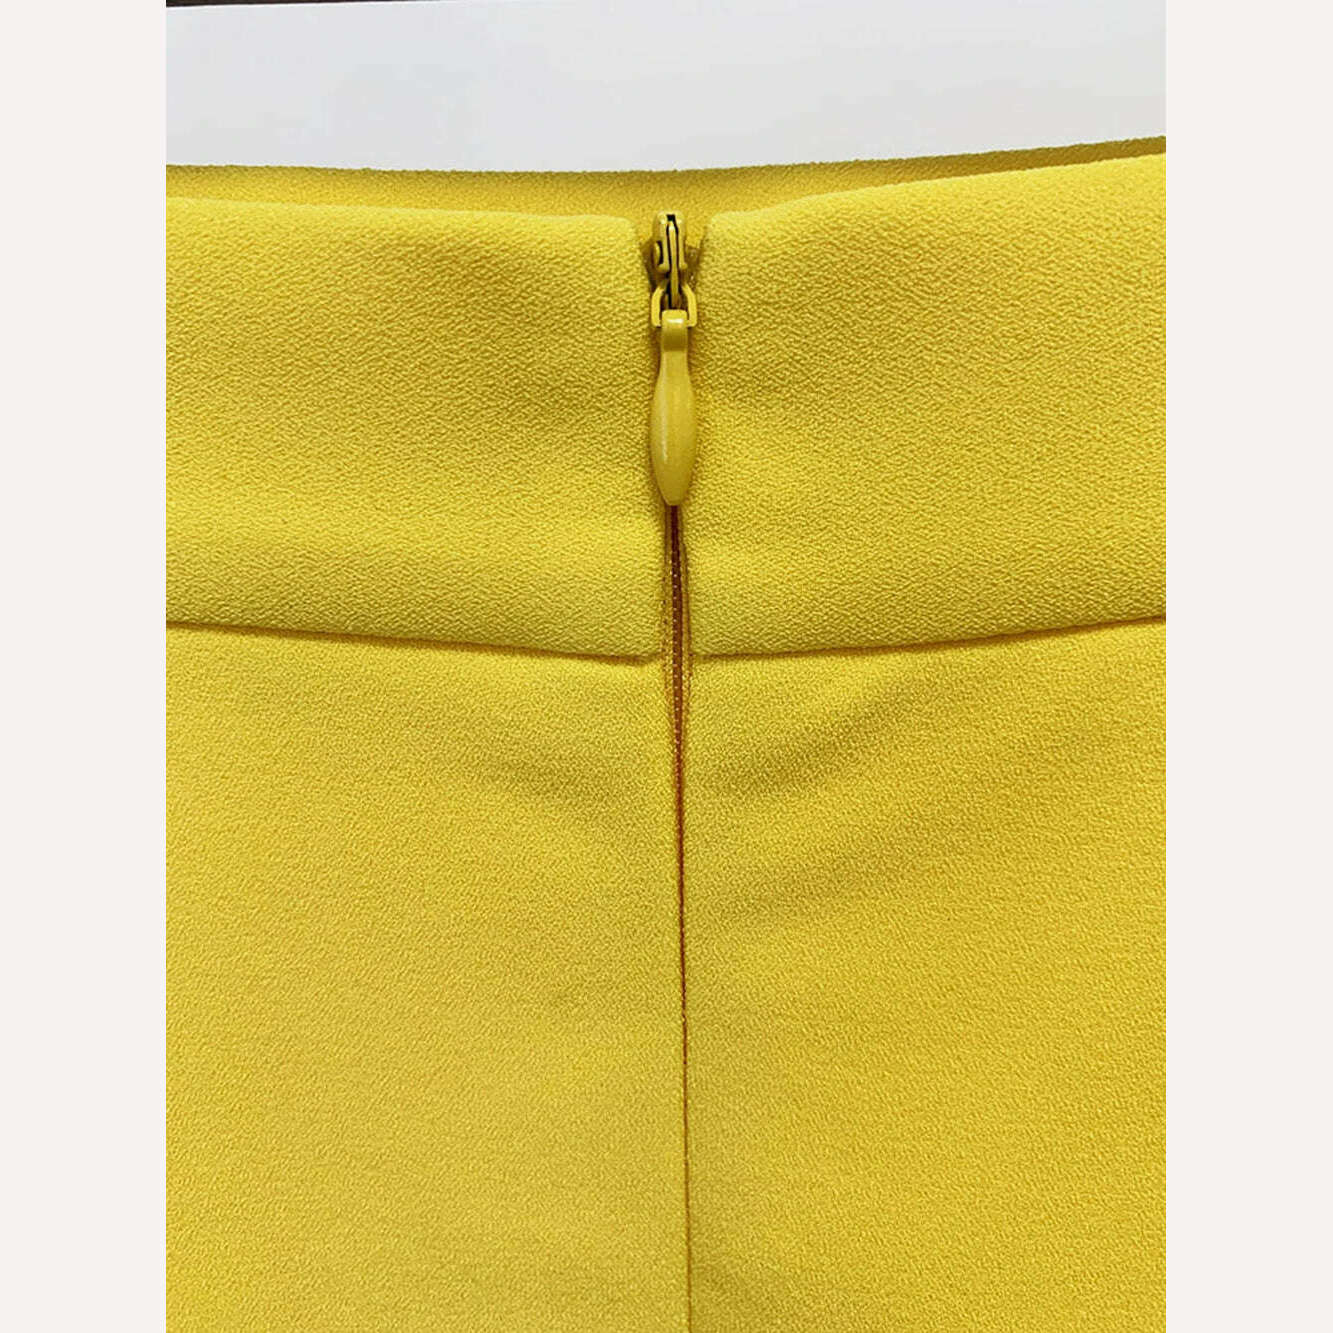 KIMLUD, Ailigou 2023 New Autumn Women's Fashion Sexy Diamond Beaded Short Top+Dress Yellow Two Piece Suit Set High Quality, KIMLUD Women's Clothes